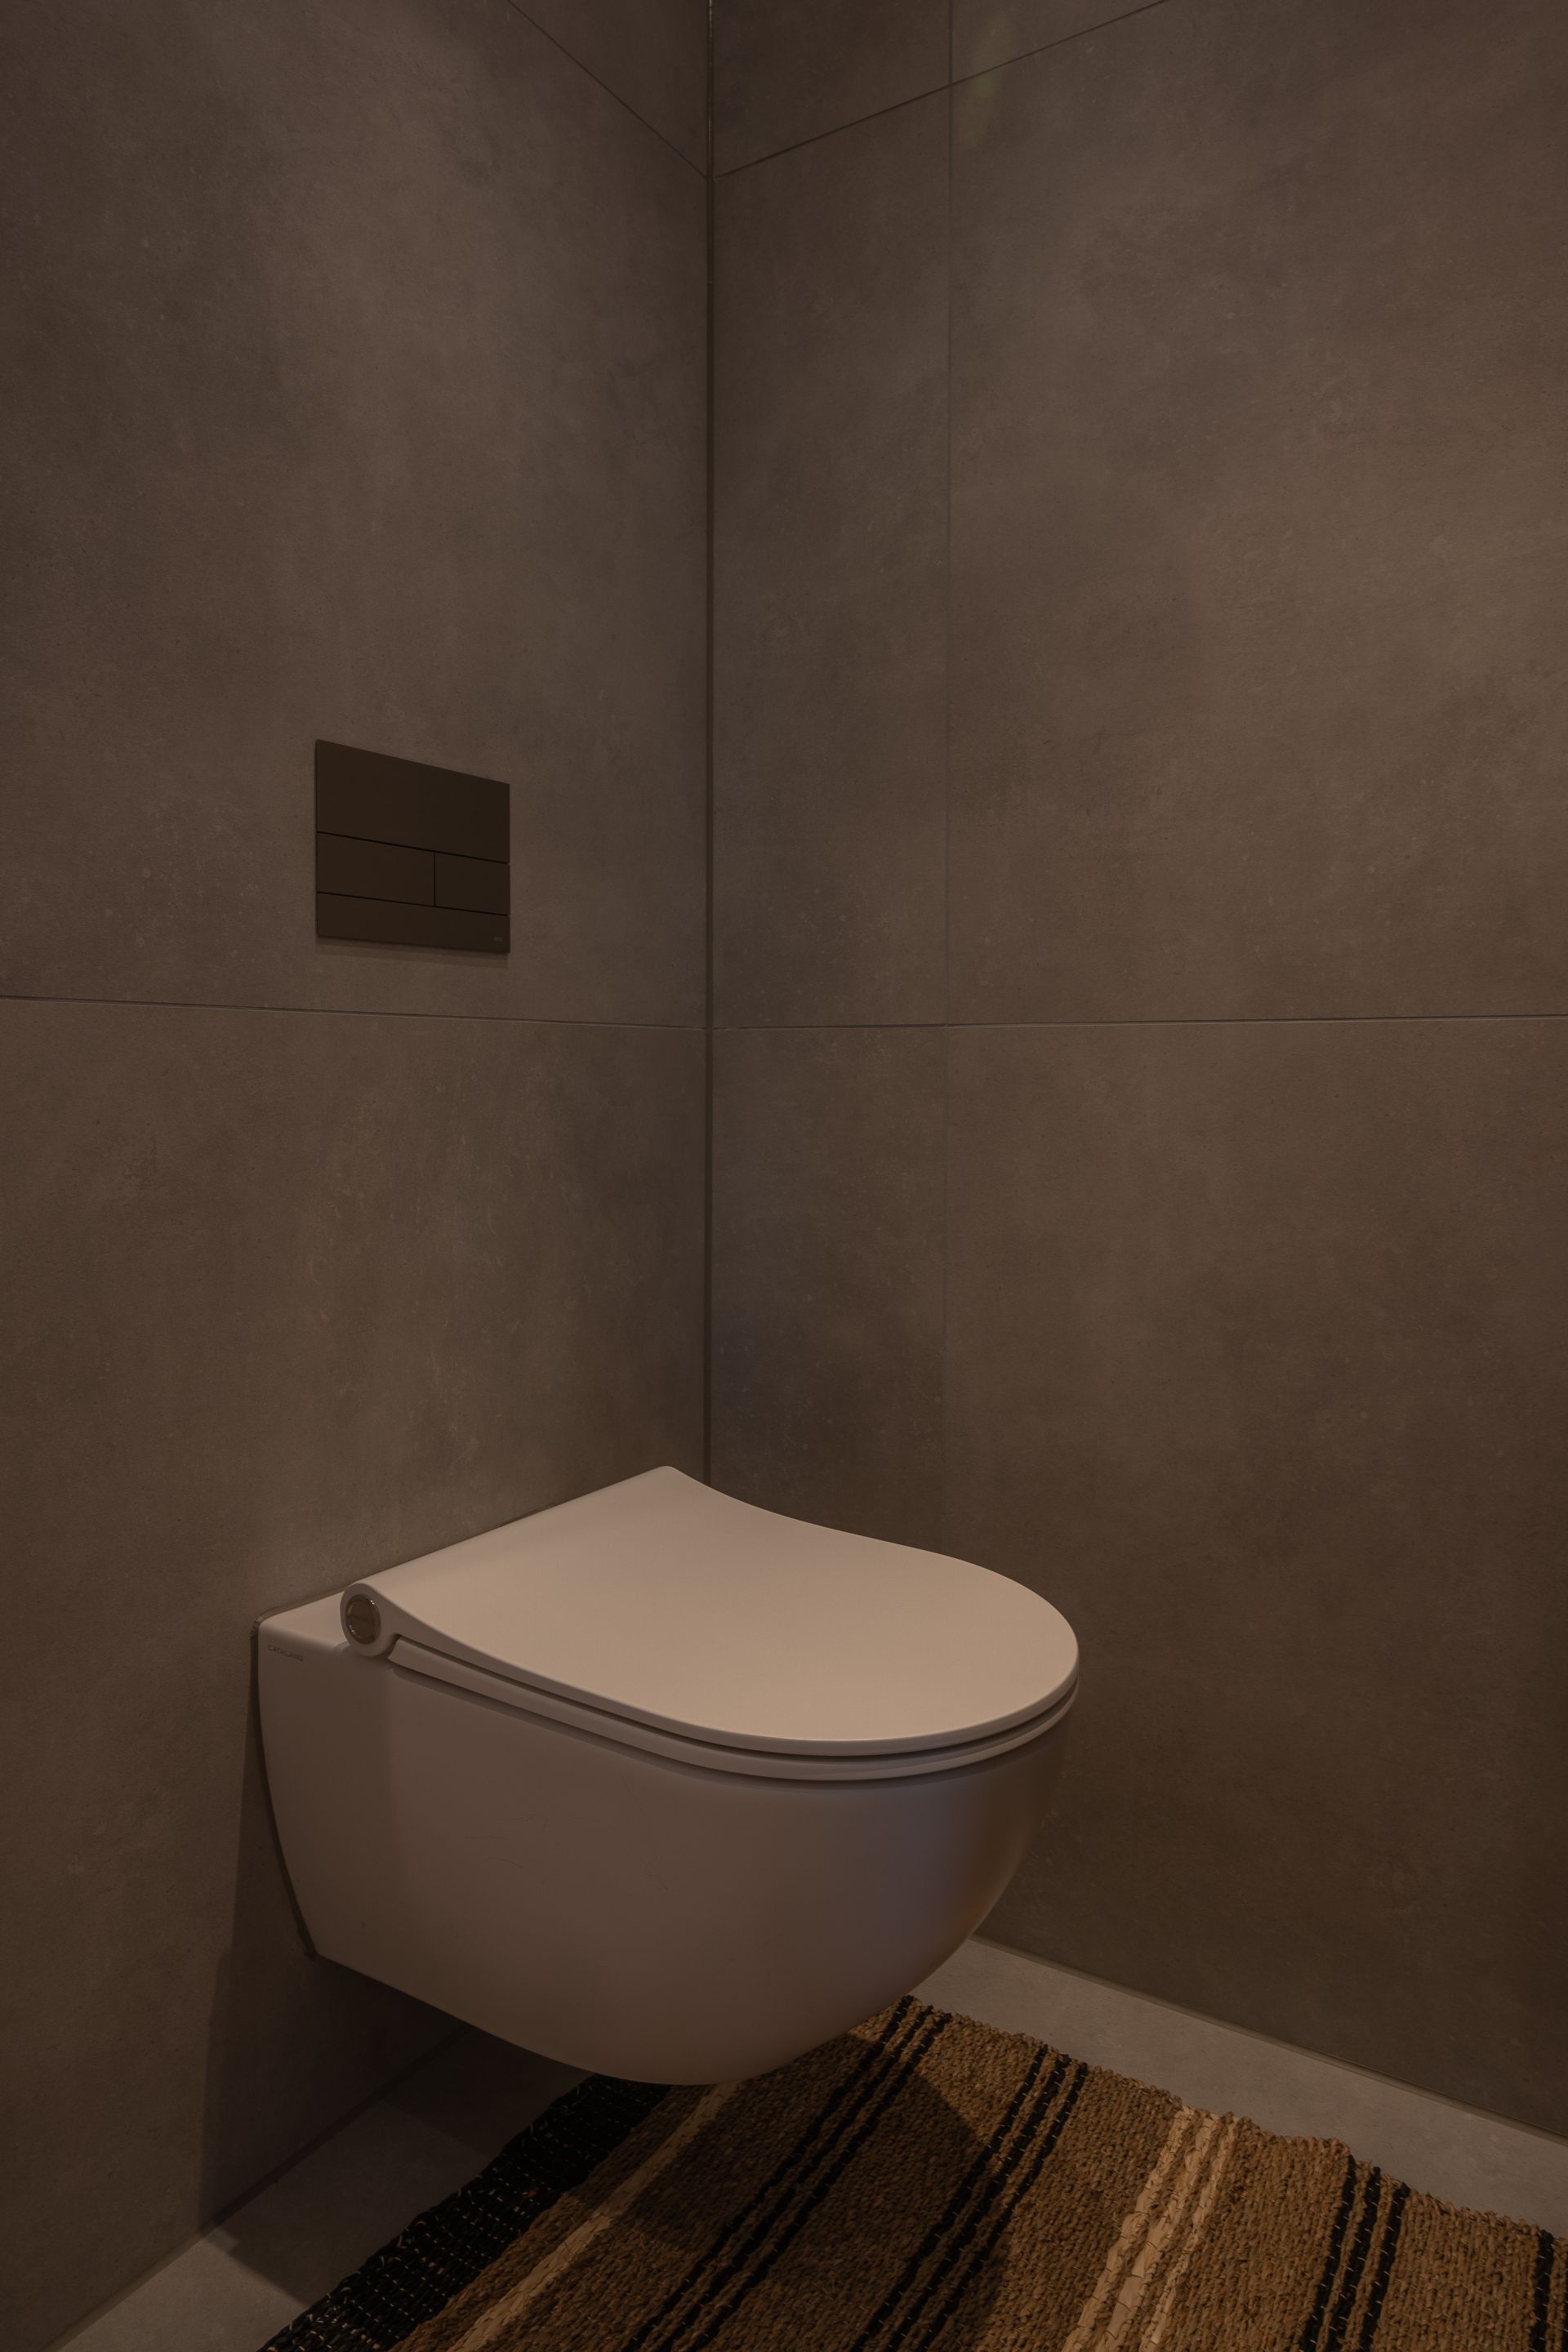 Foto: jaloersmakende  moderne kleine badkamer  eerste kamer badkamers   013